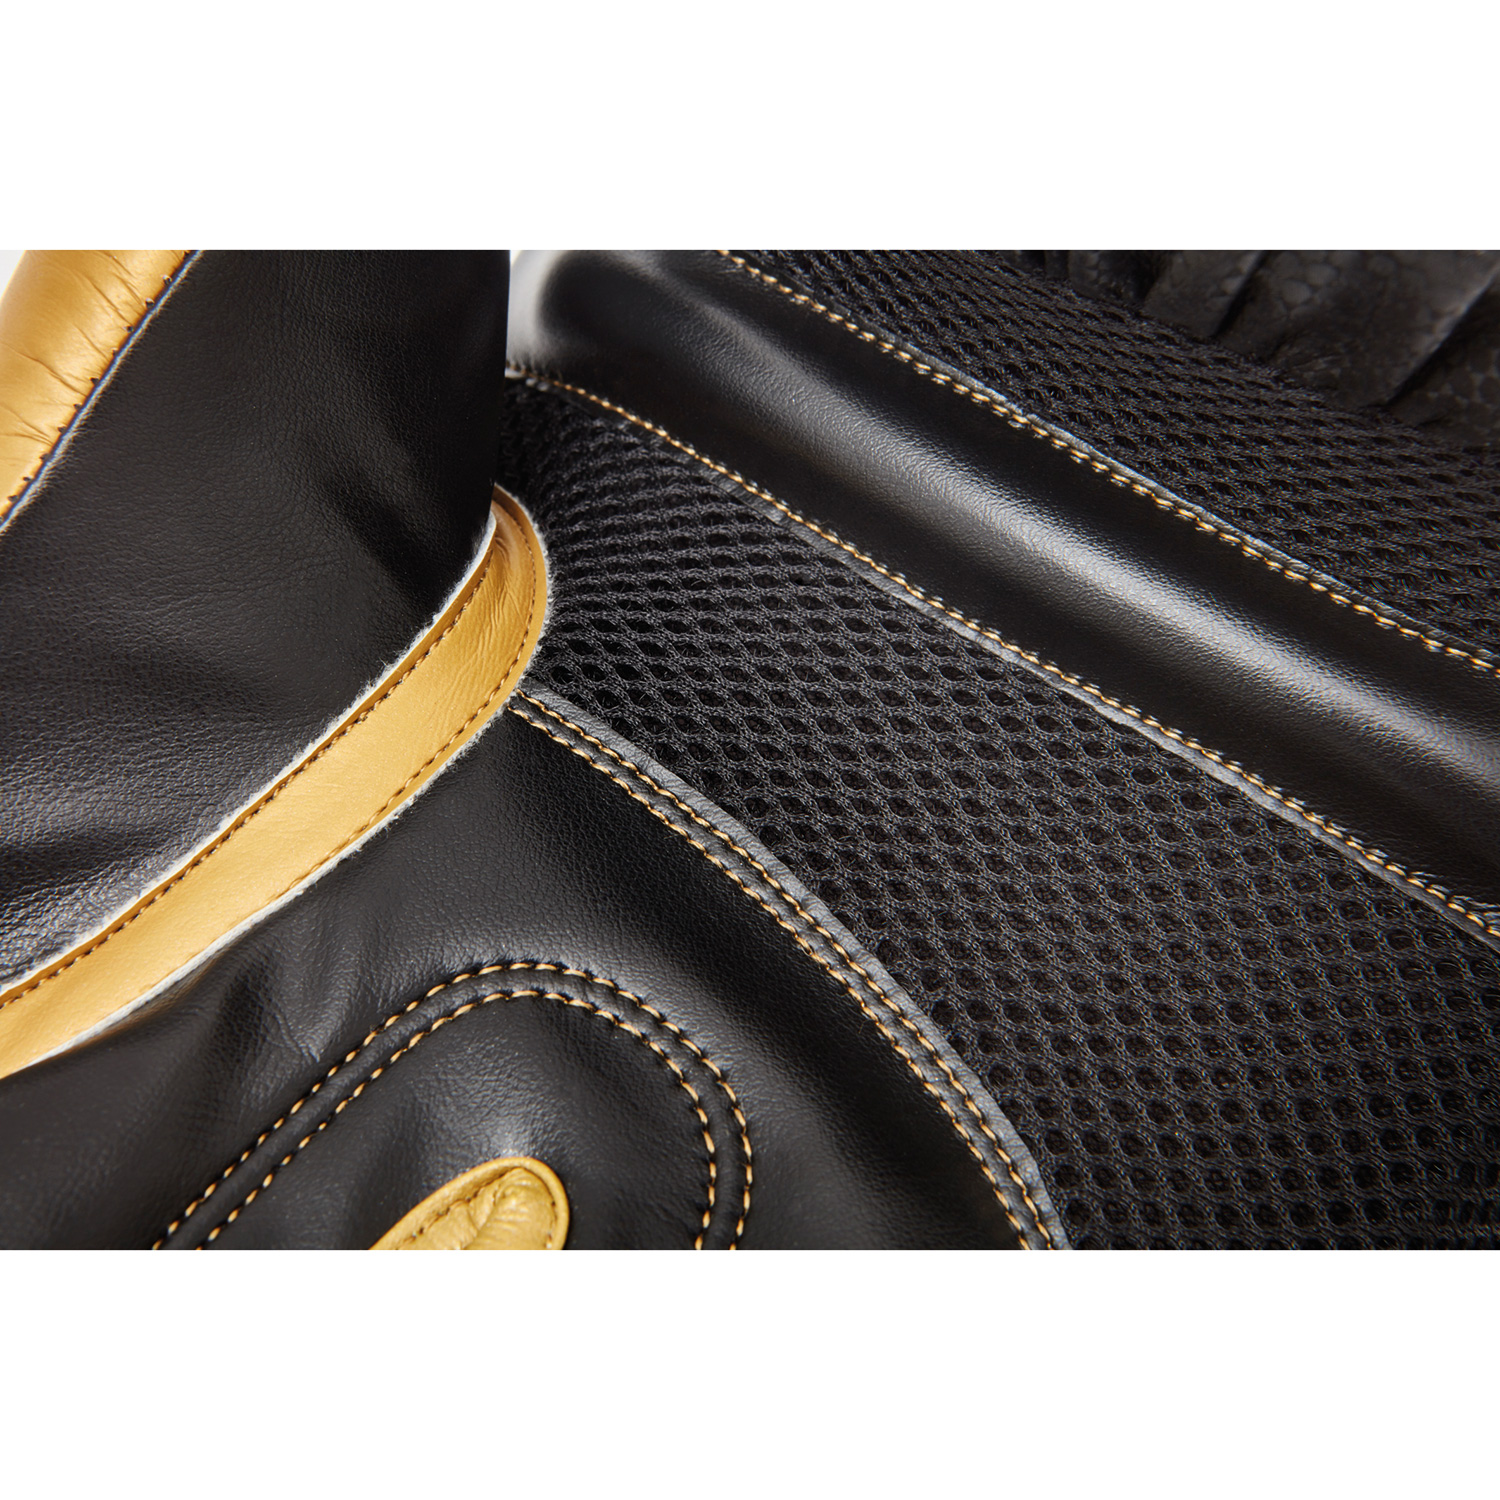 Reebok boxing gloves gold/black 12 oz